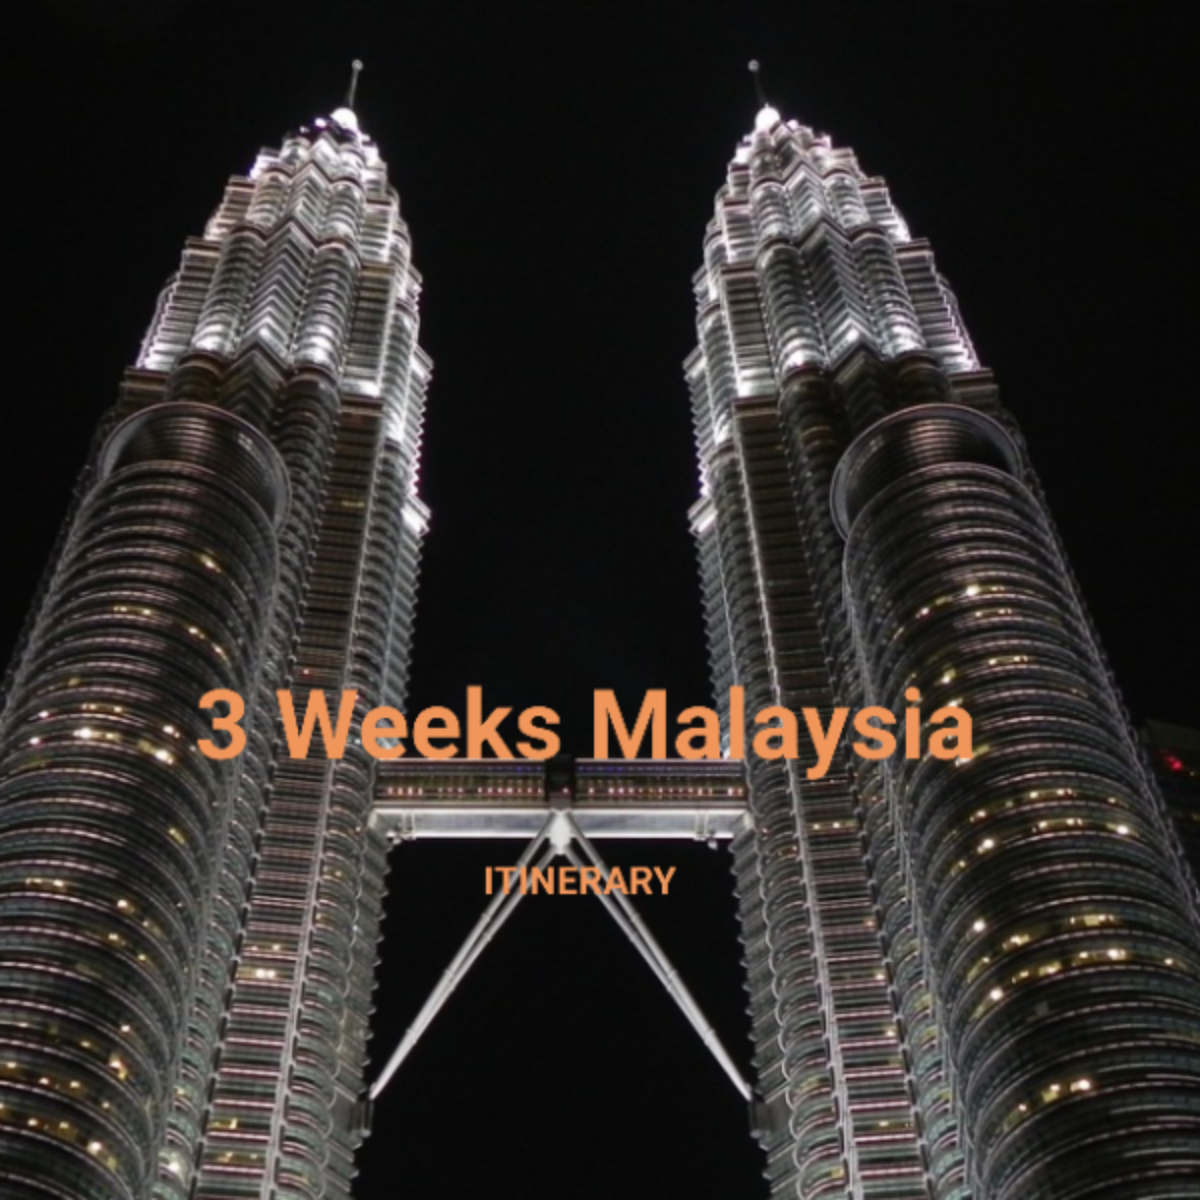 3 Week Malaysia Itinerary Template